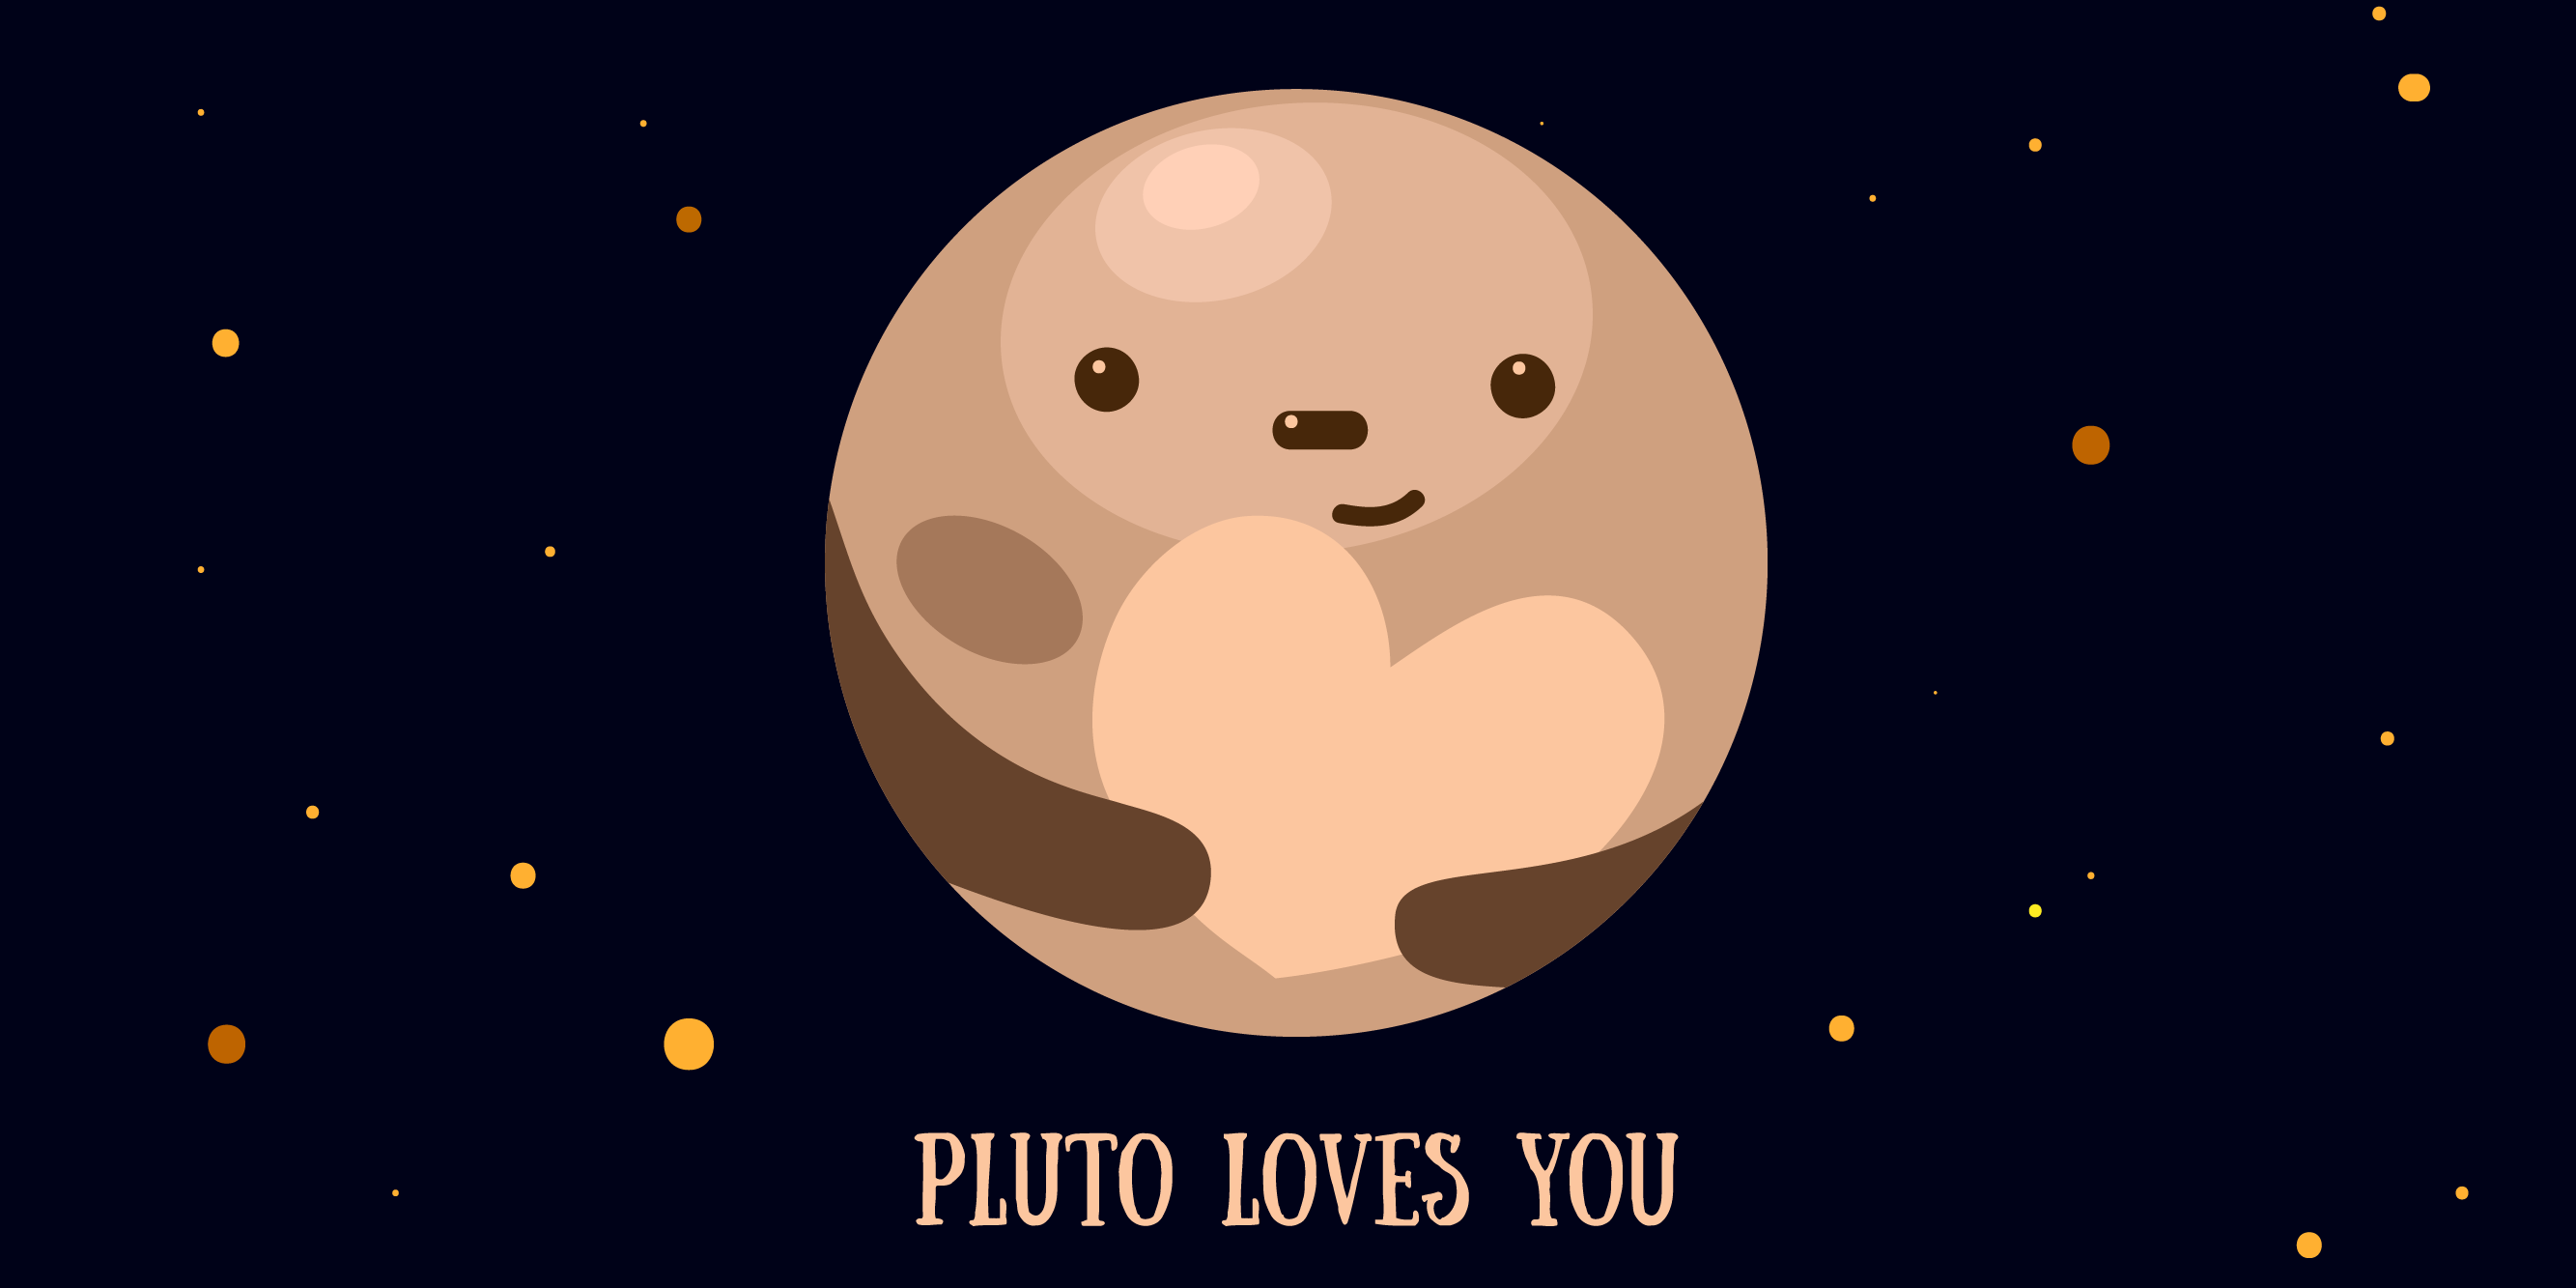 Pluto cartoon planet. Плутон (Планета). Планета Плутон картинки. Плутон Планета рисунок. Изображение Плутона.